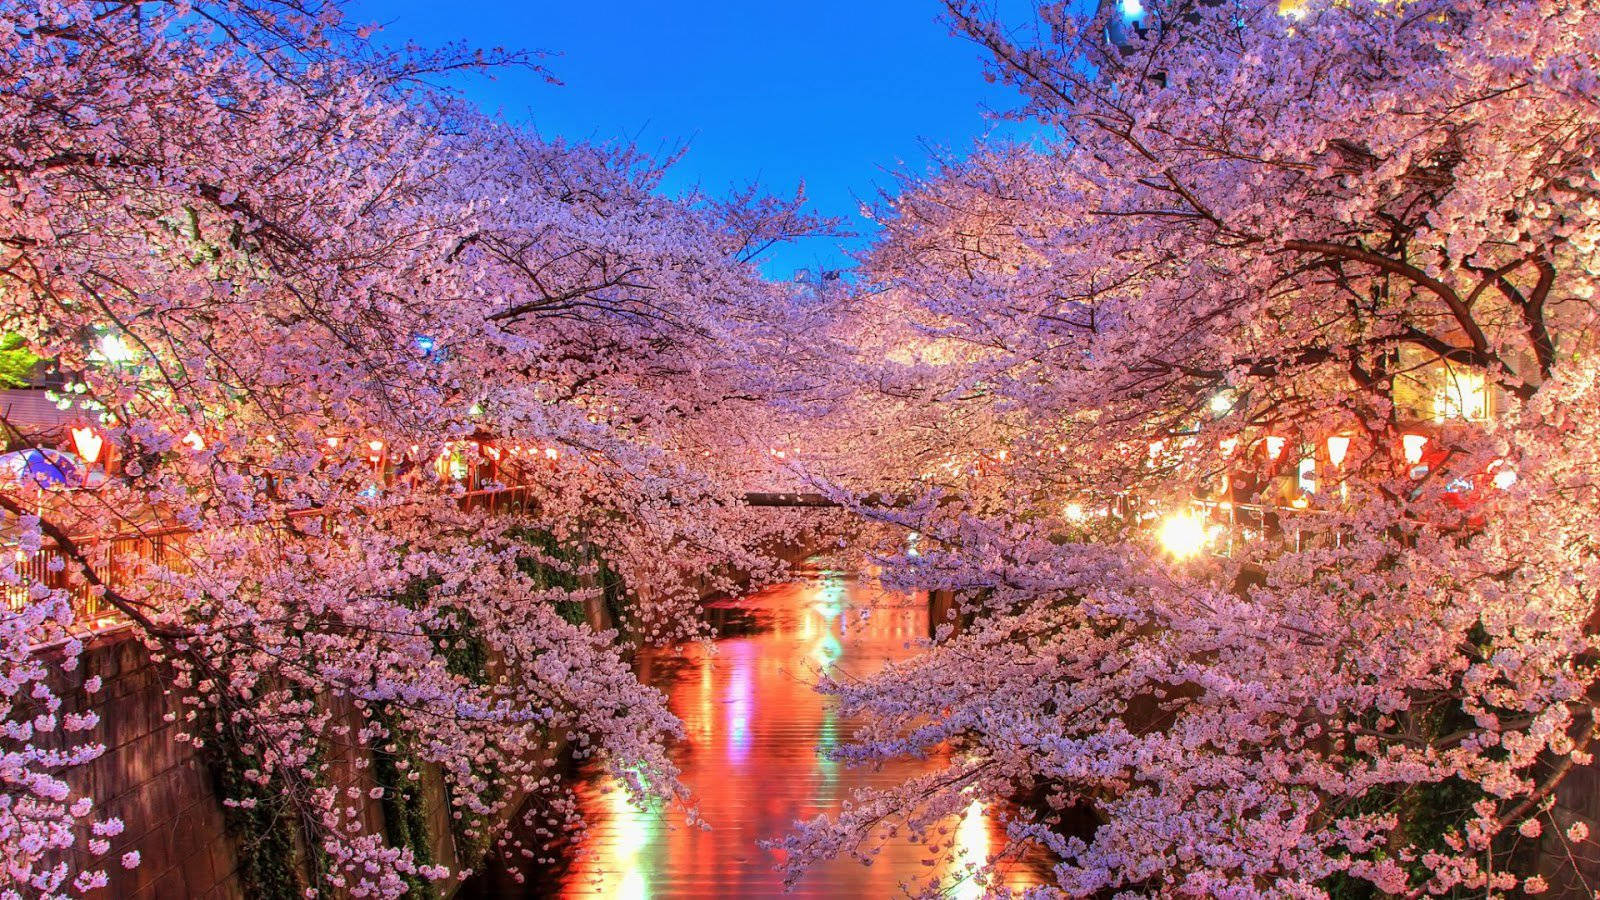 Download Sakura Festival Full HD 1600x900 Wallpaper